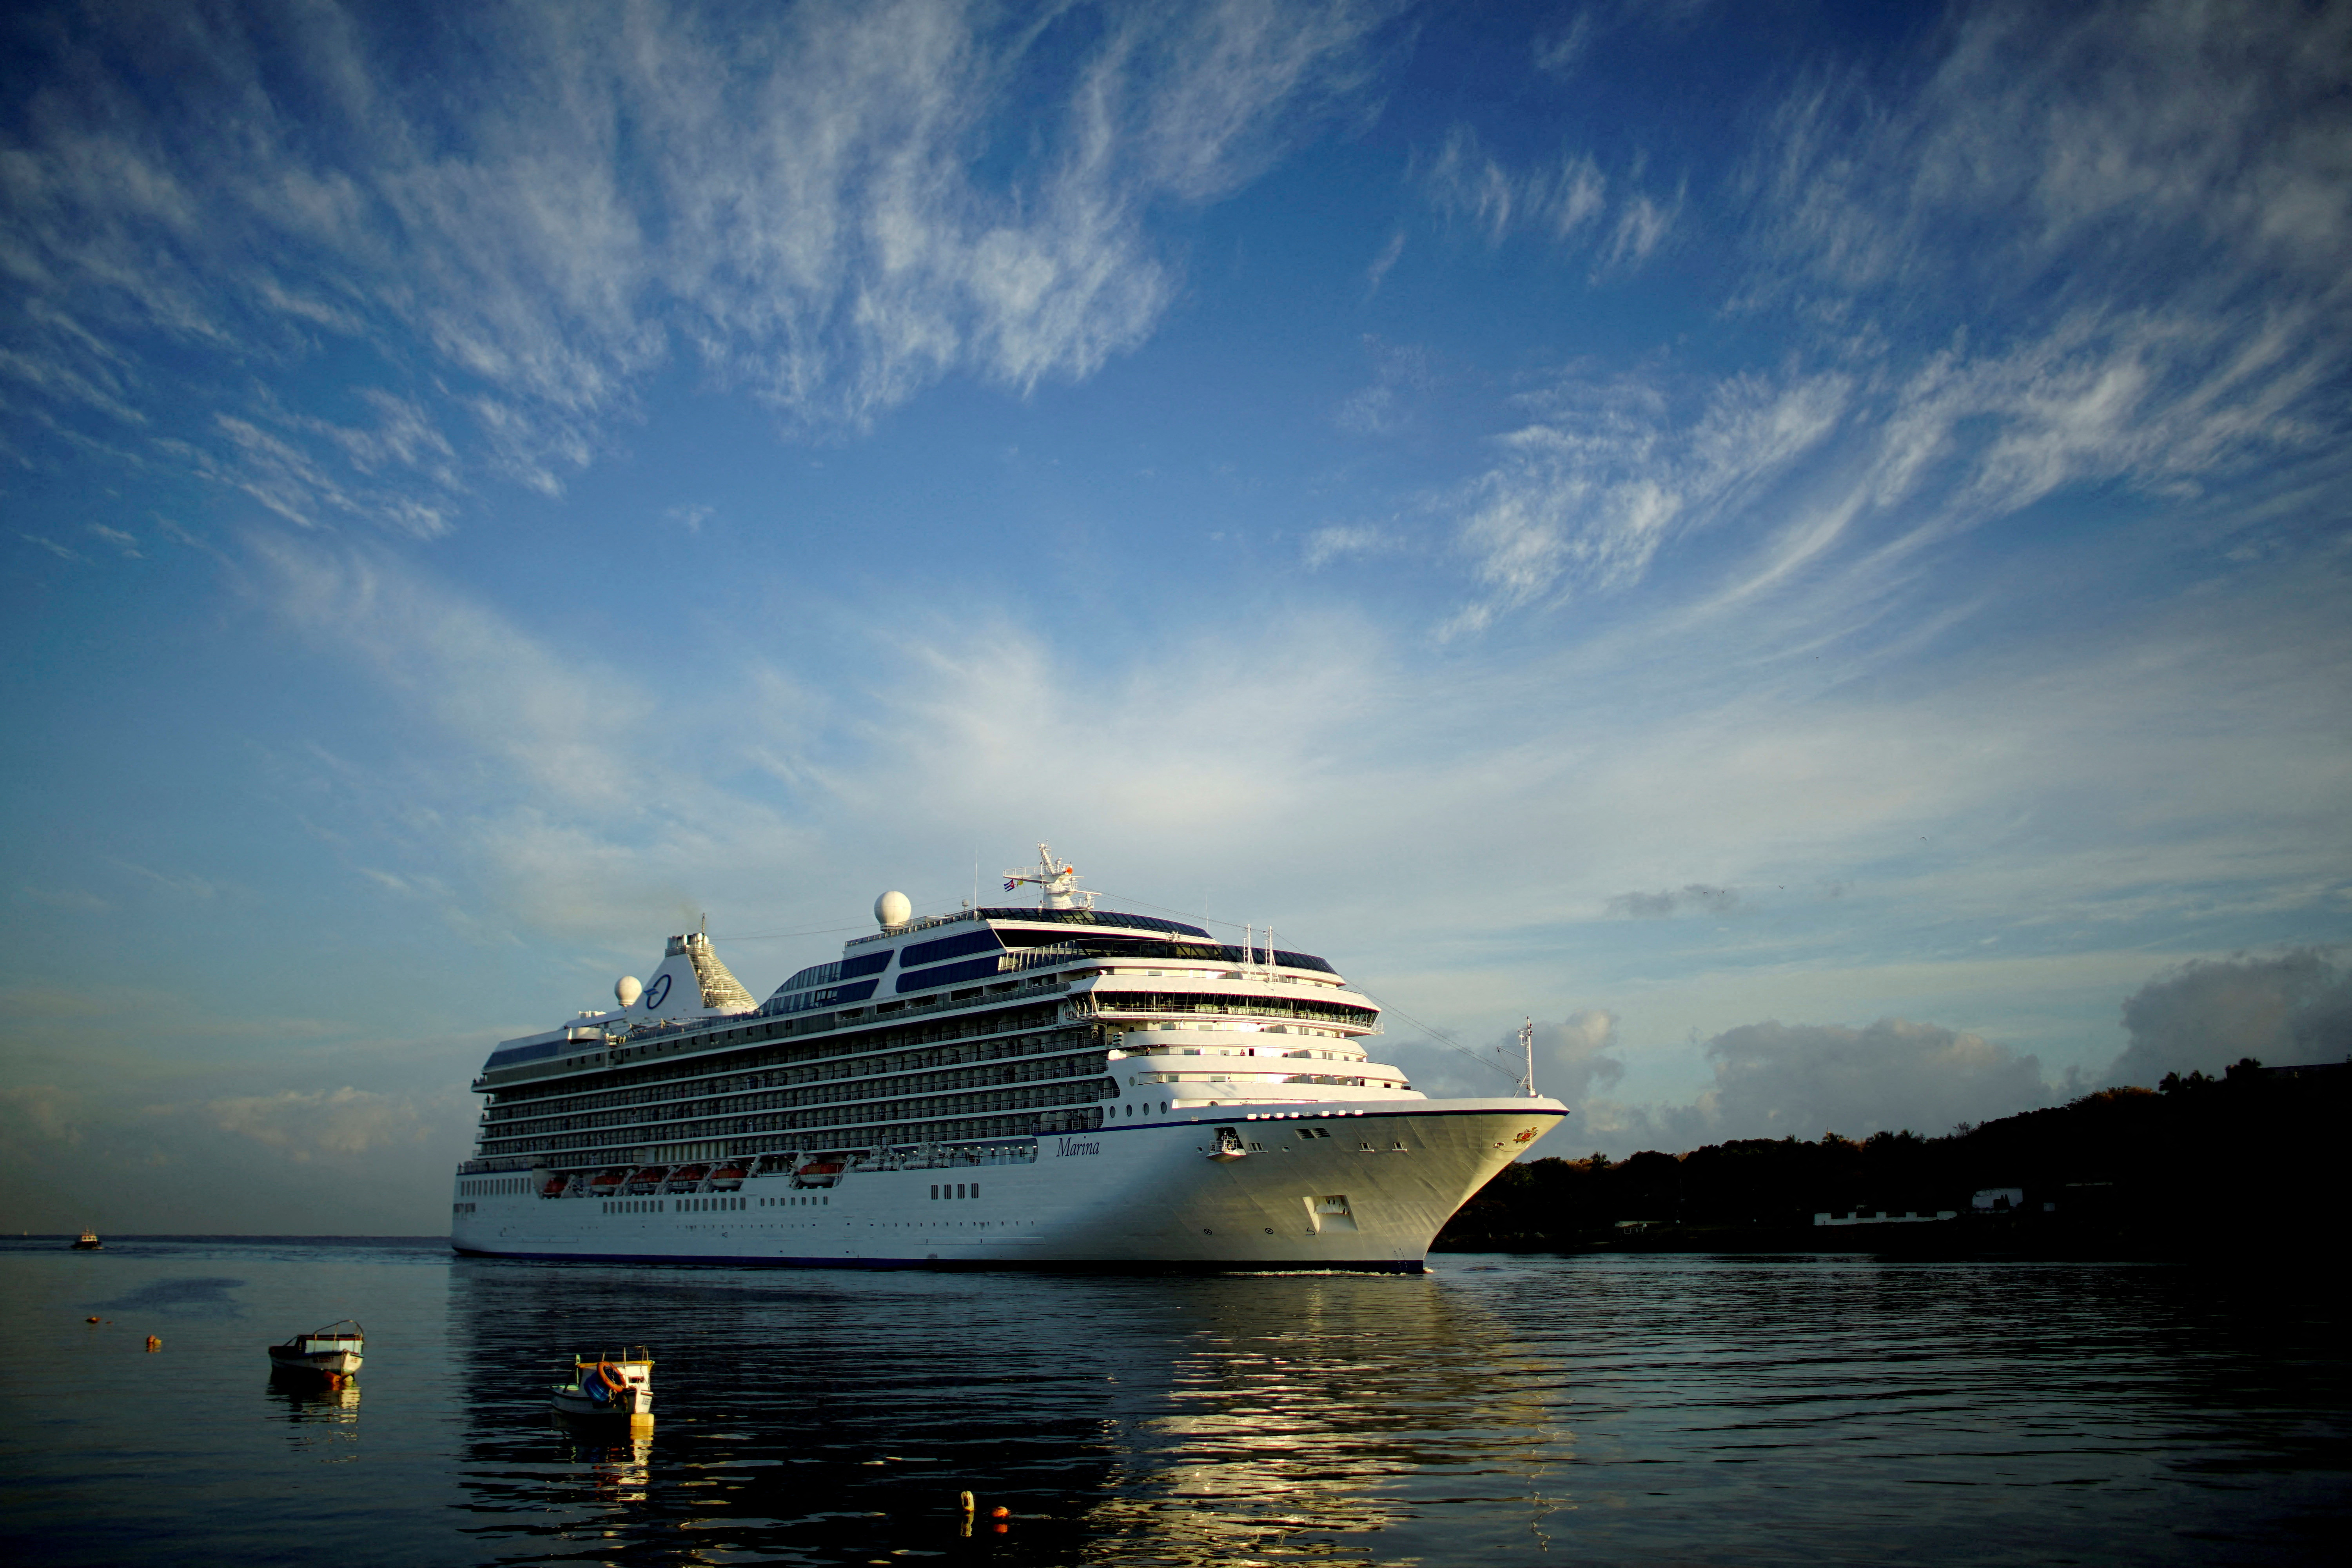 U.S. Norwegian Cruise Line Holdings cruise ship Marina arrives at the Havana bay